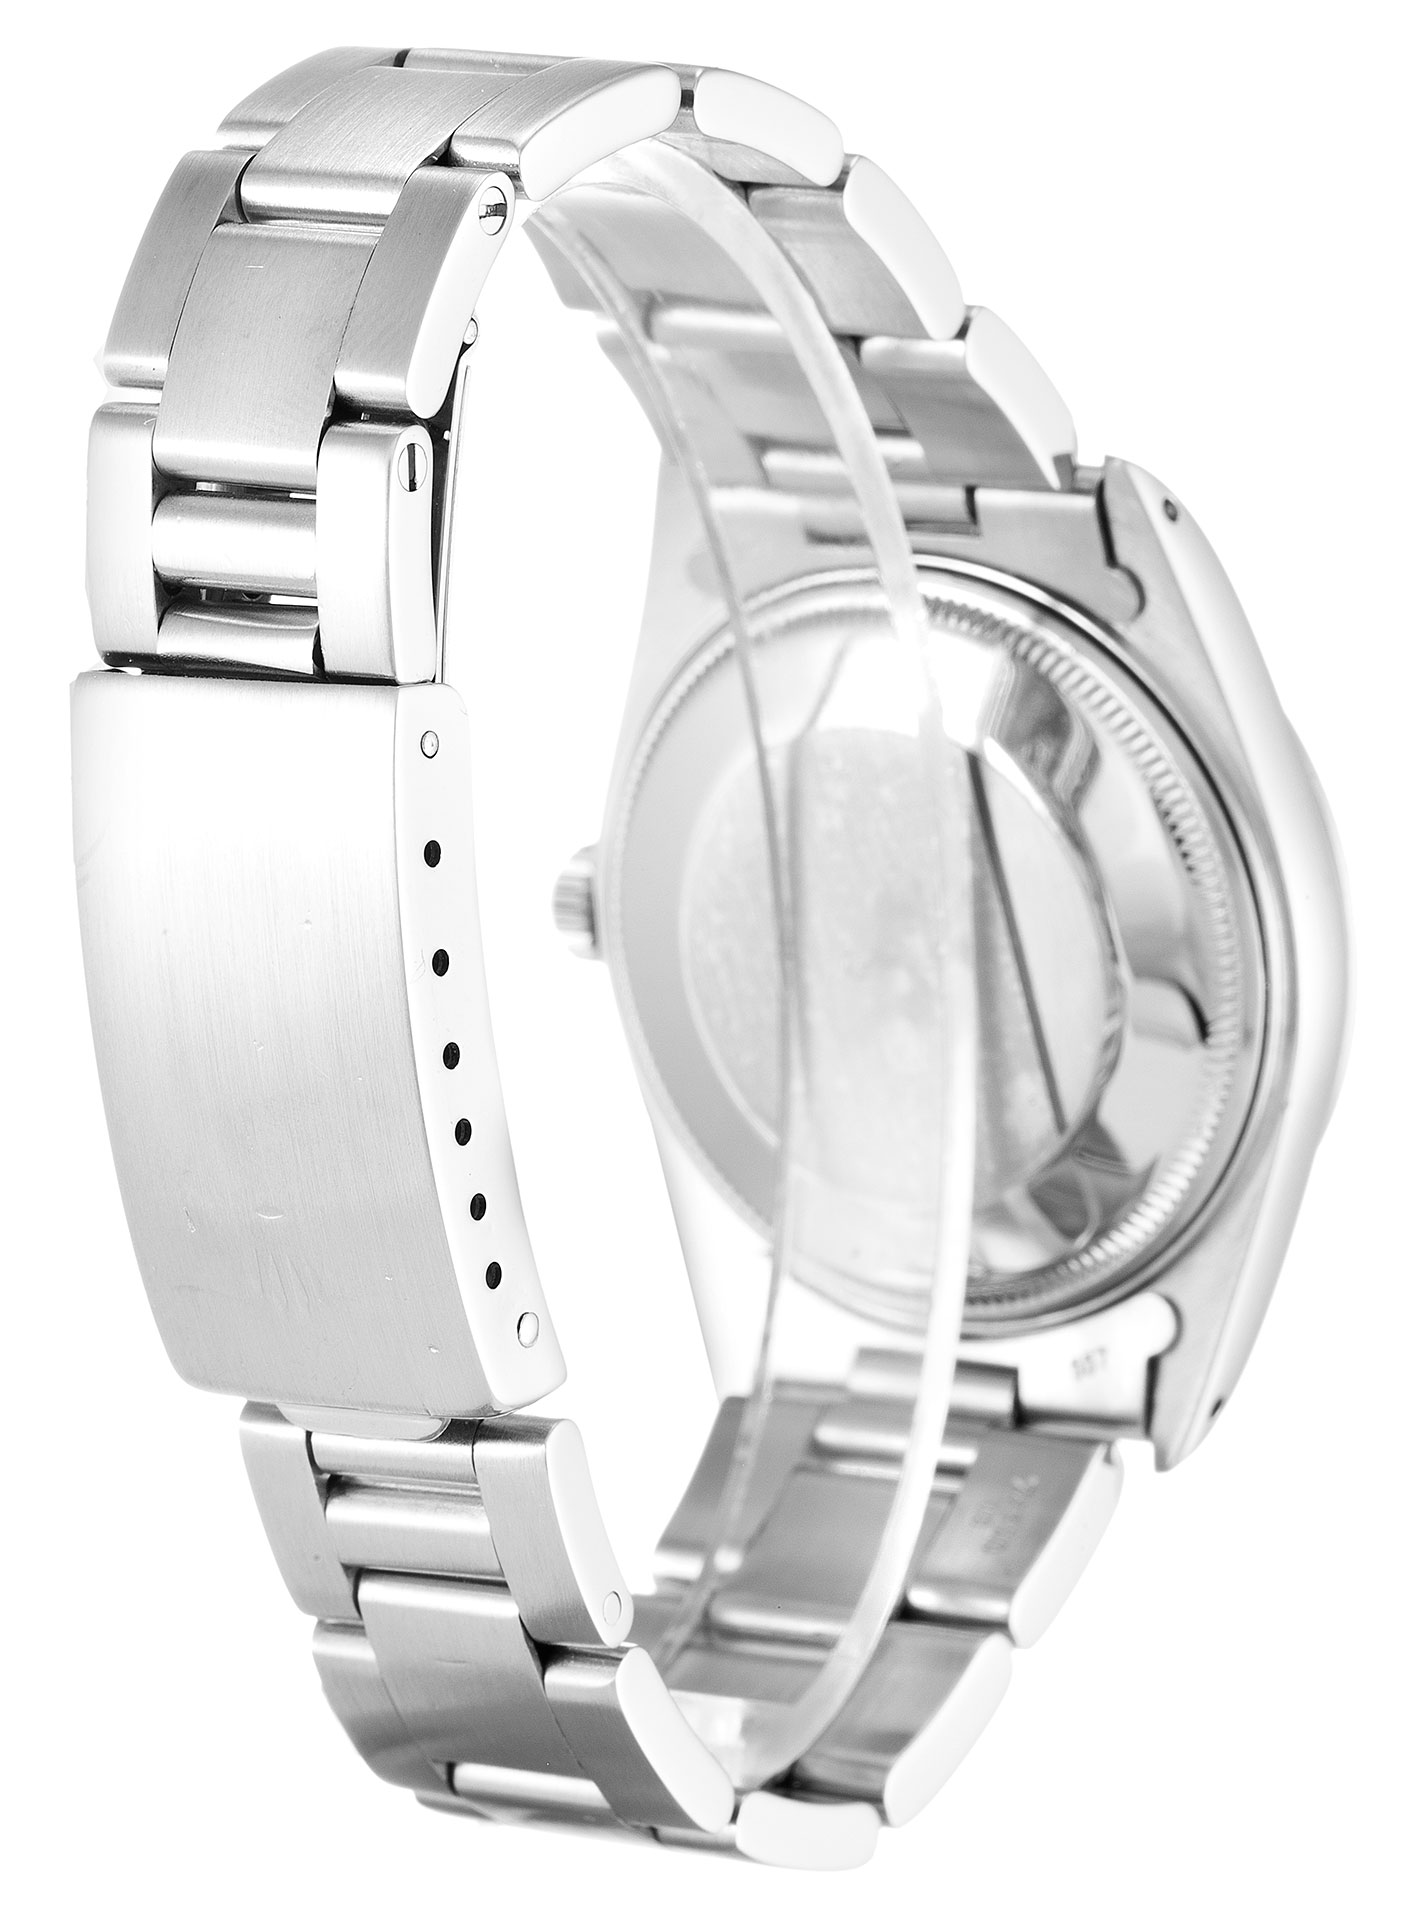 Replicas Relojes Oyster-Perpetual-Date  De Lujo Replica Rolex  Oyster-Perpetual-Date Baratos